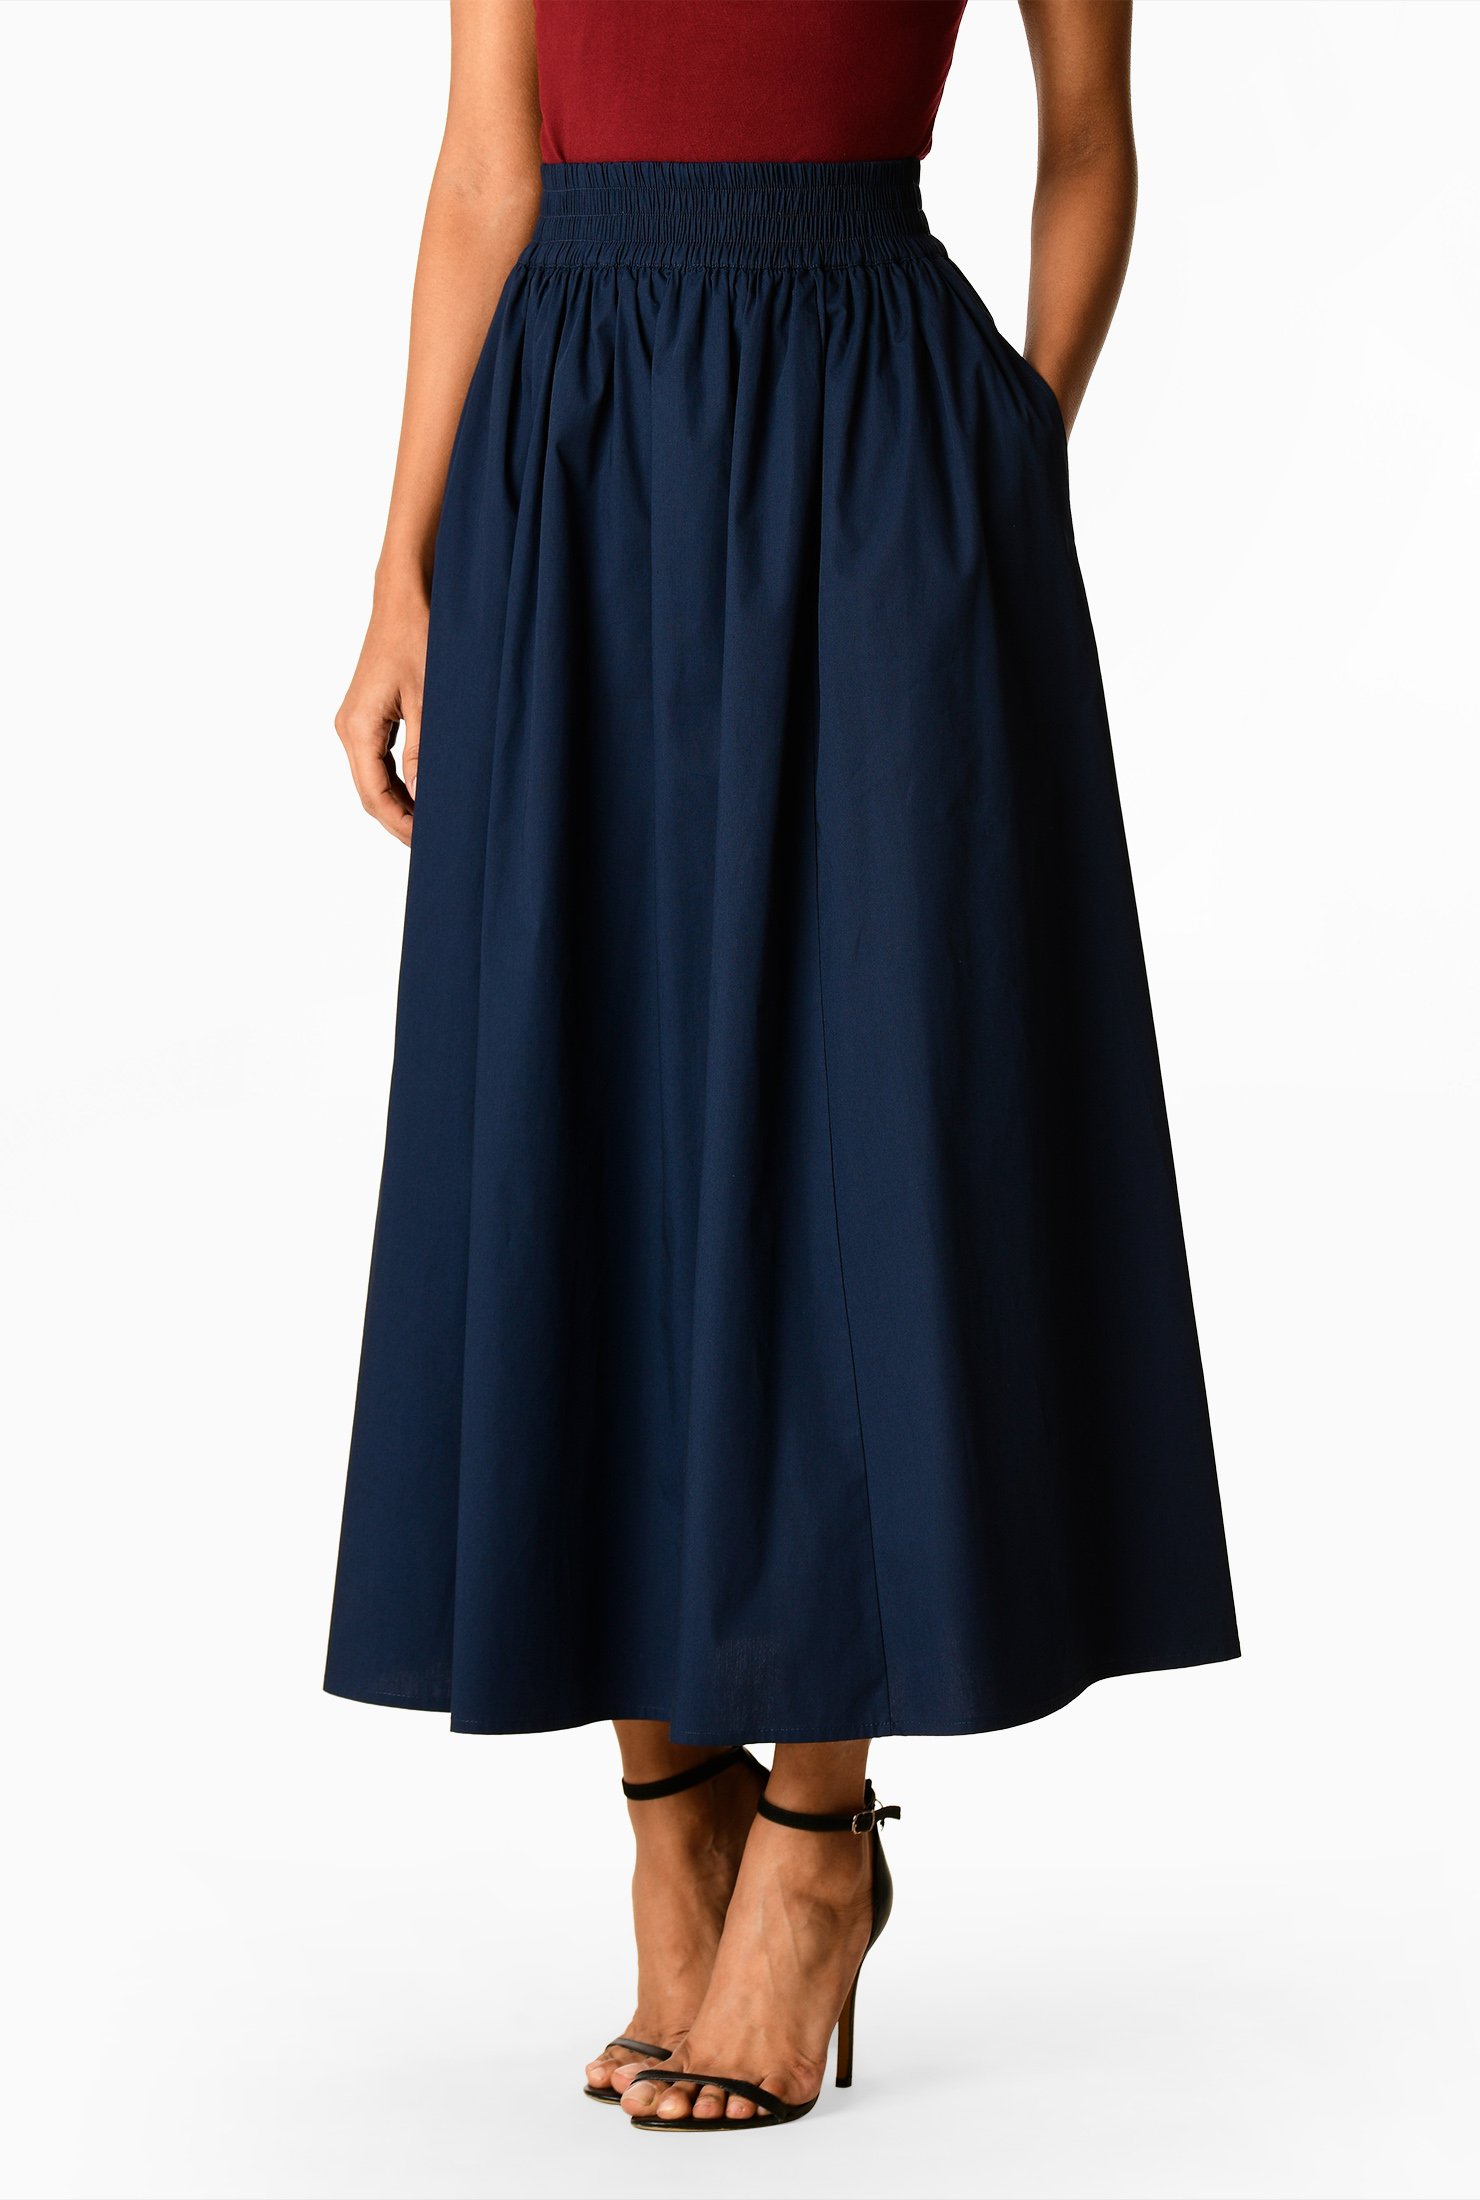 Shop Smocked elastic waist poplin skirt | eShakti